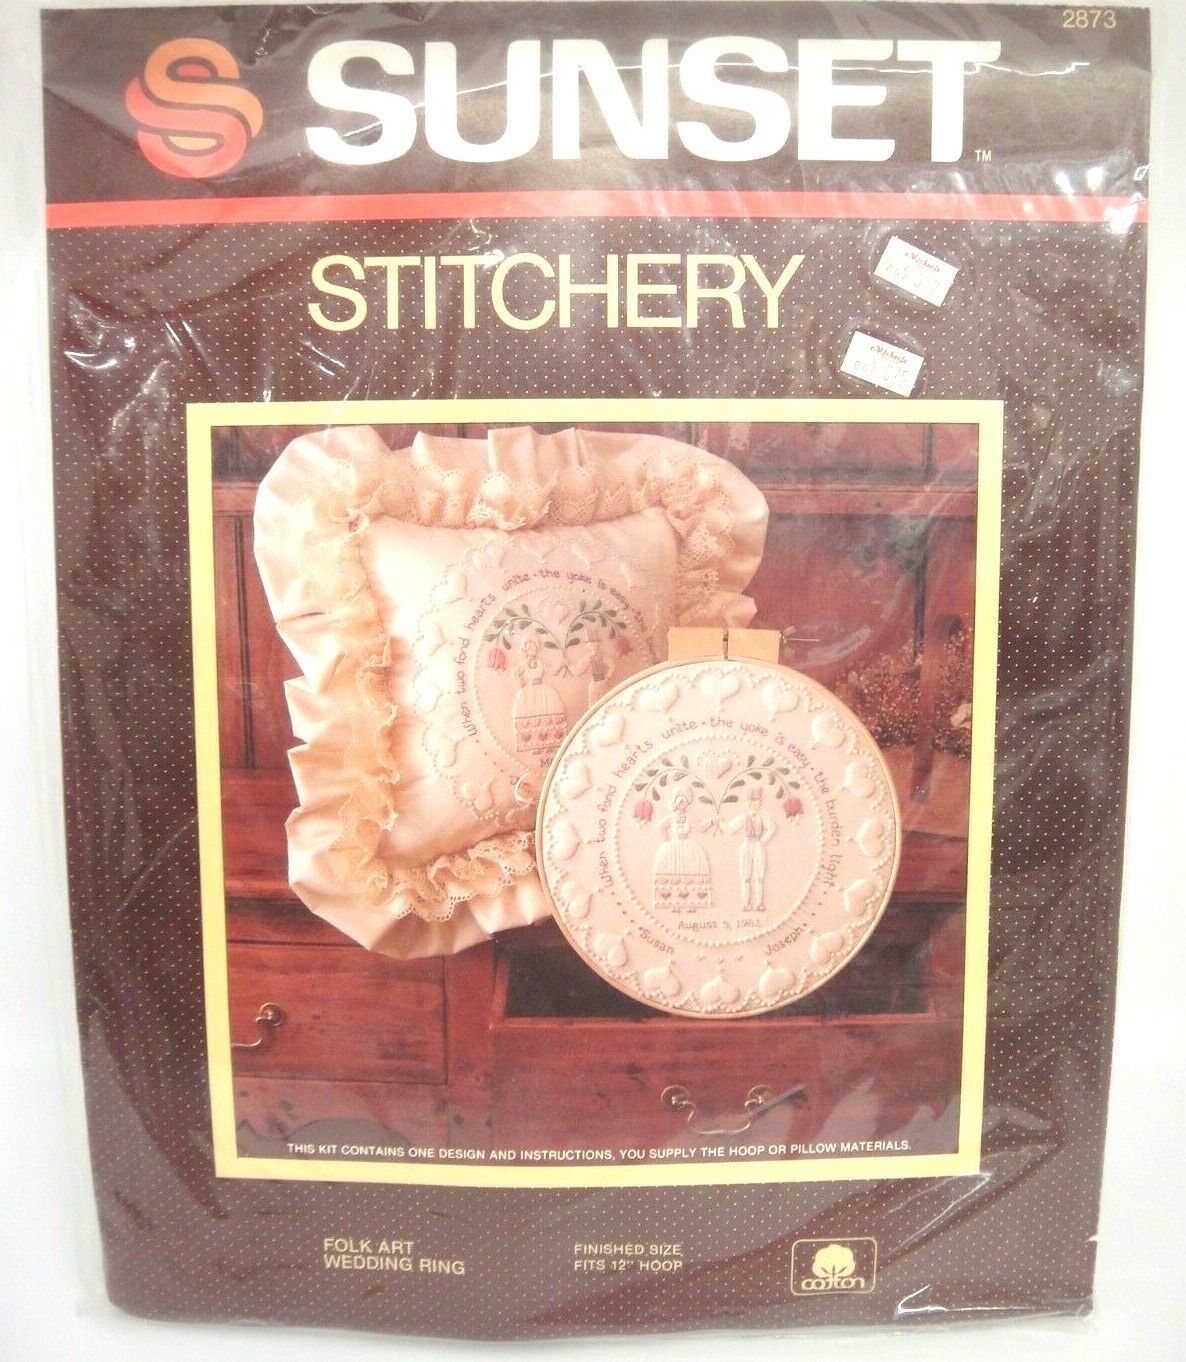 Vintage Sunset Stitchery Kit 2873 Folk Art Wedding Ring for 12" Hoop Pillow NIP - $7.51